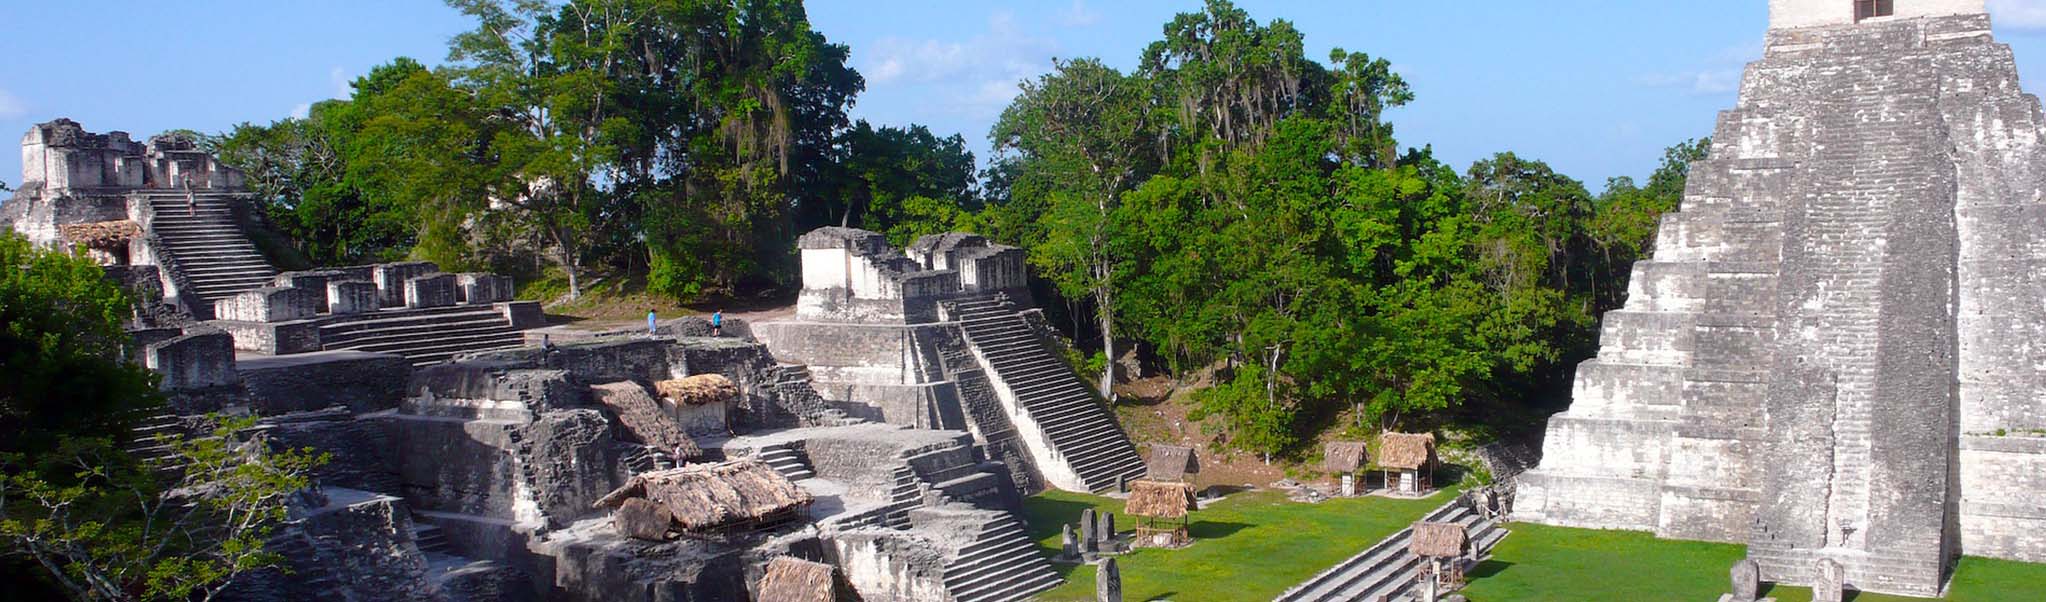 temple maya amerique latine vincent thepaut